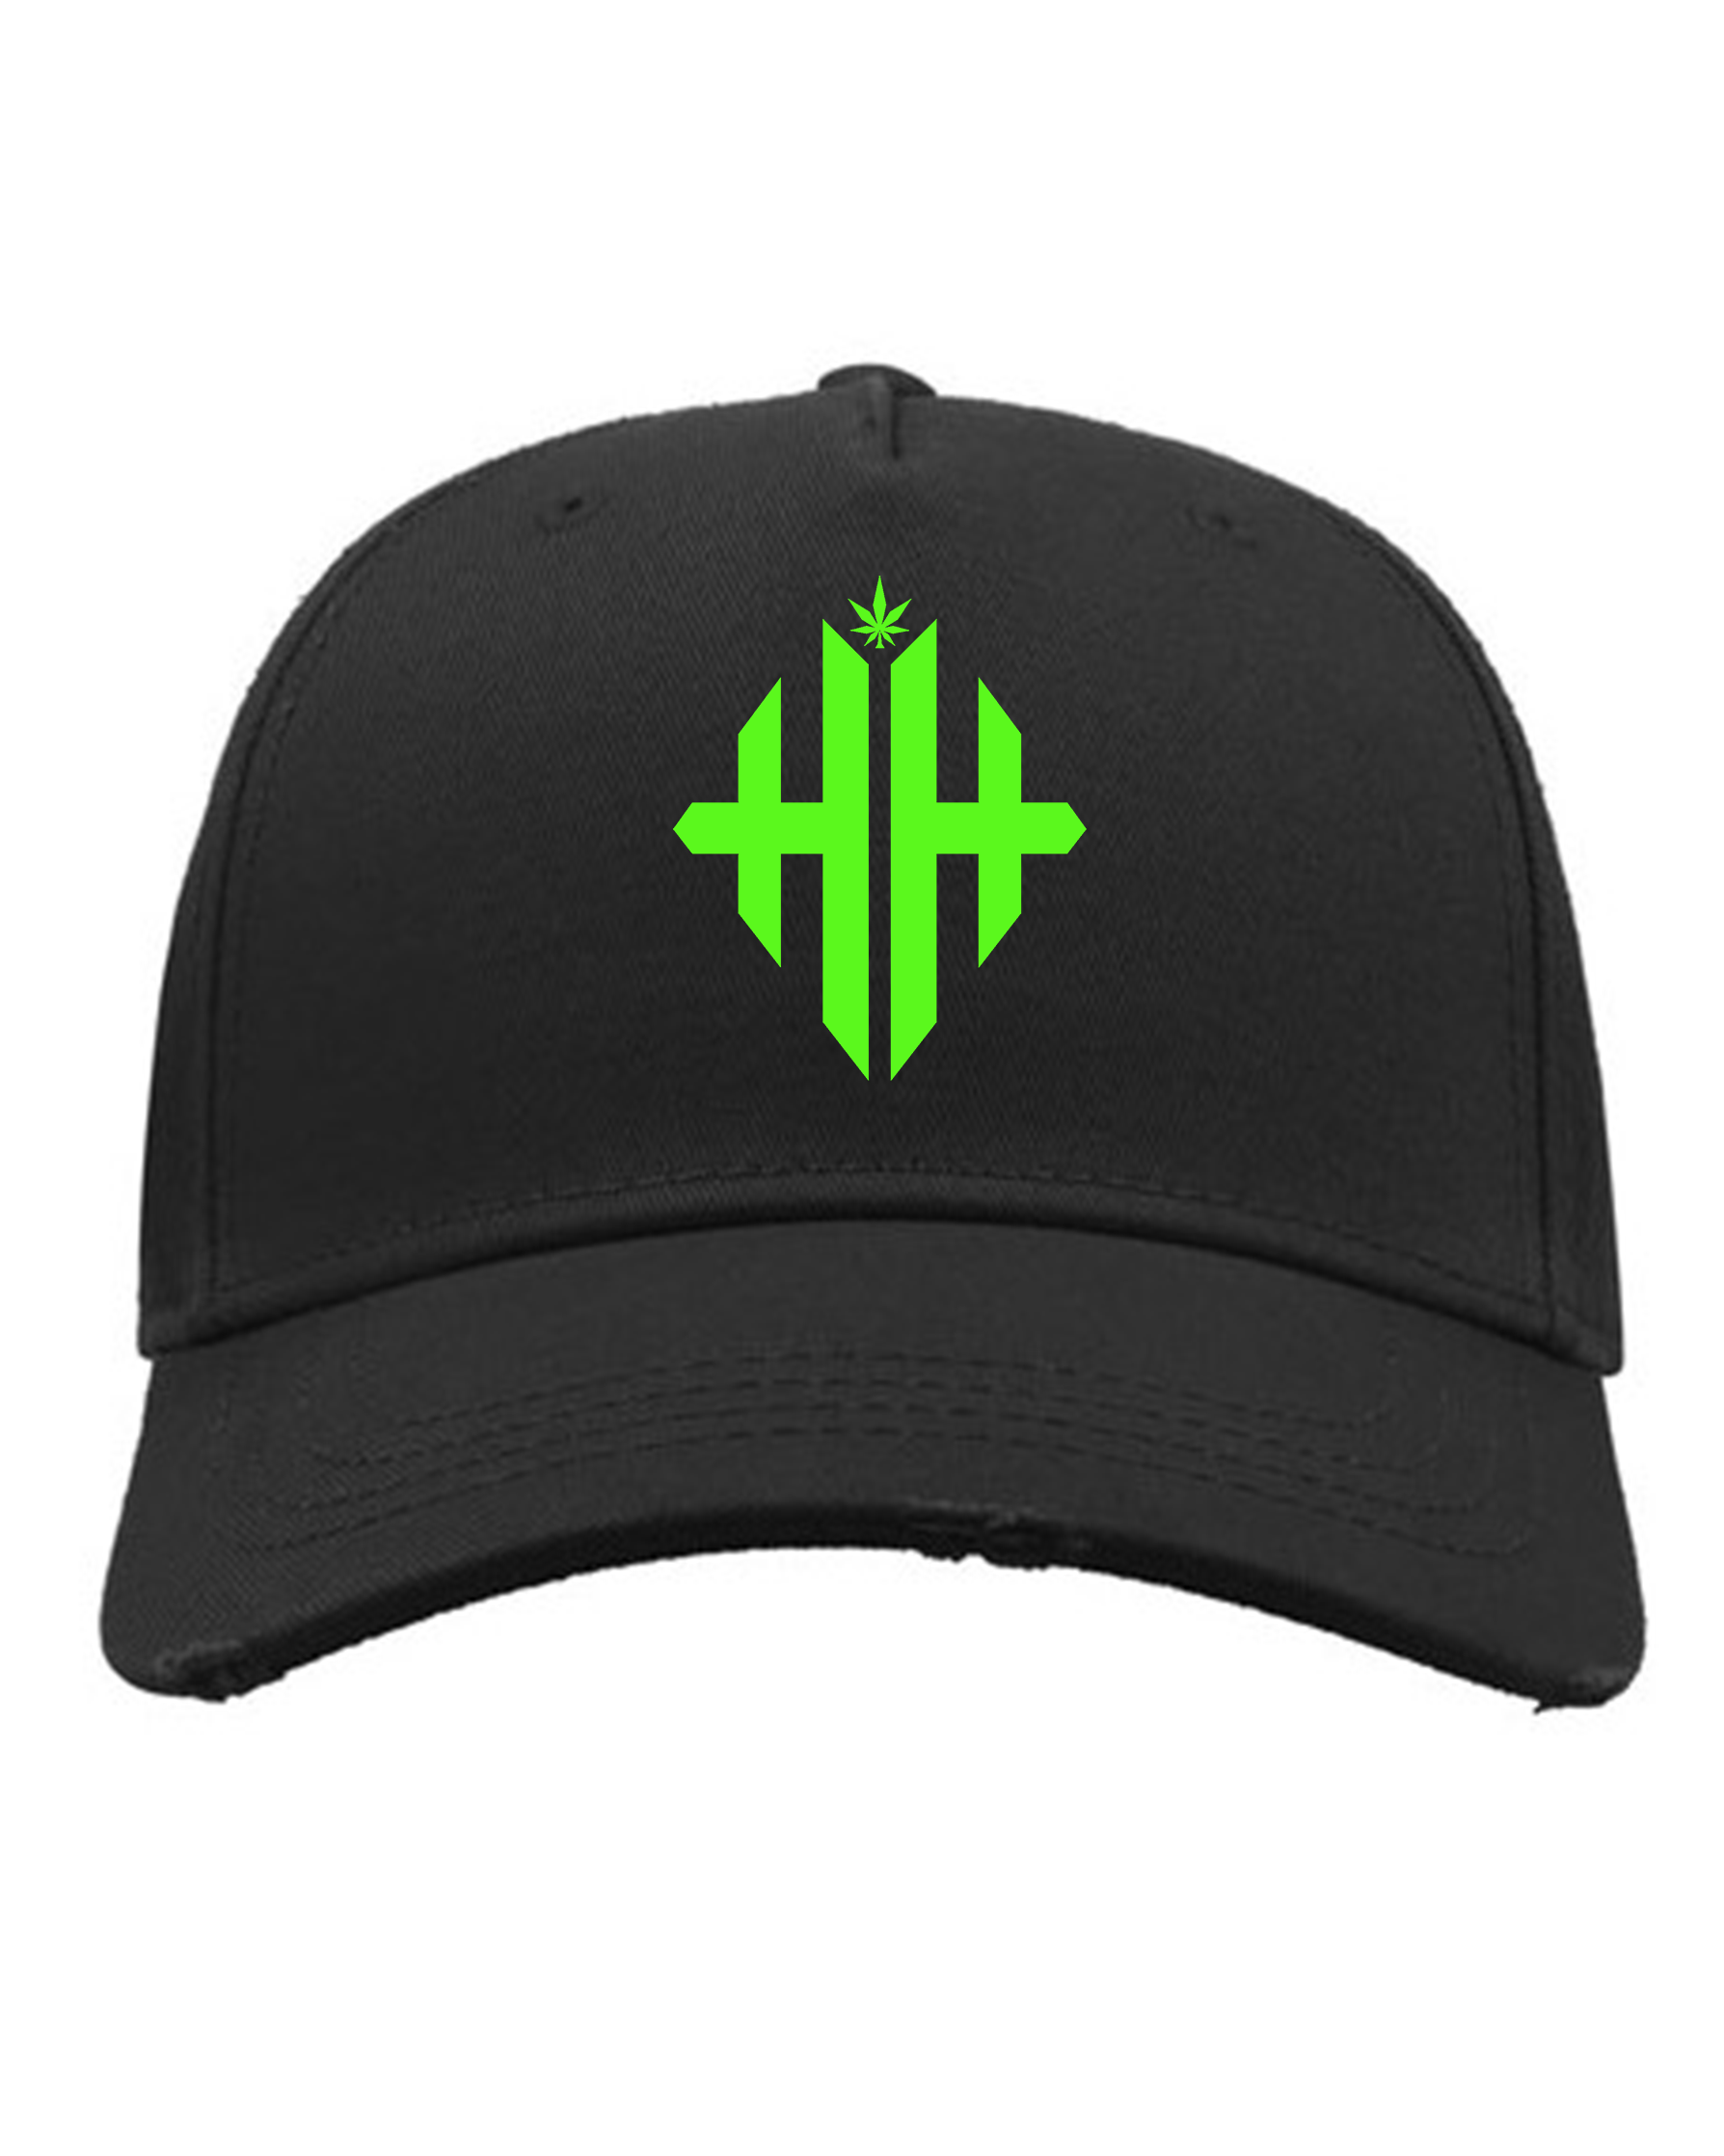 Herbman Hustlin Monogram Cap - Black/Neon Green